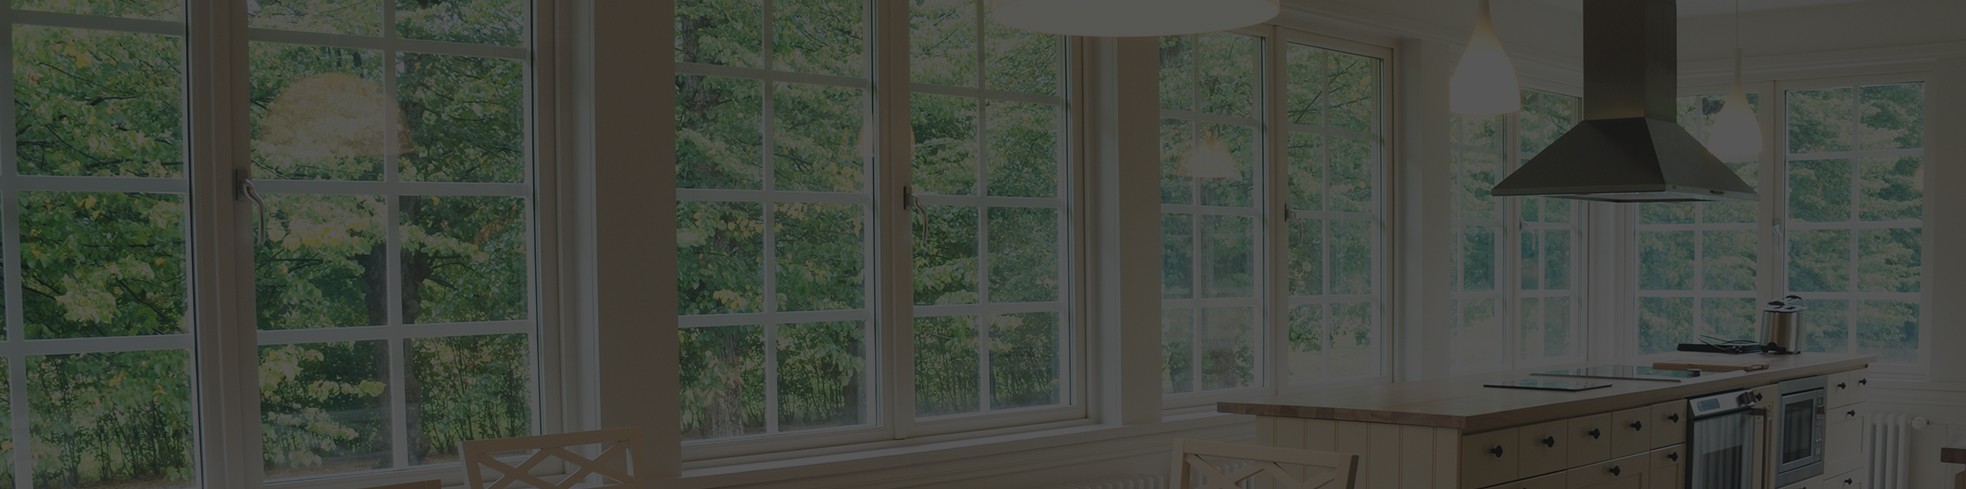 Brilliance Windows for Appleton, Madison, and Milwaukee area homes